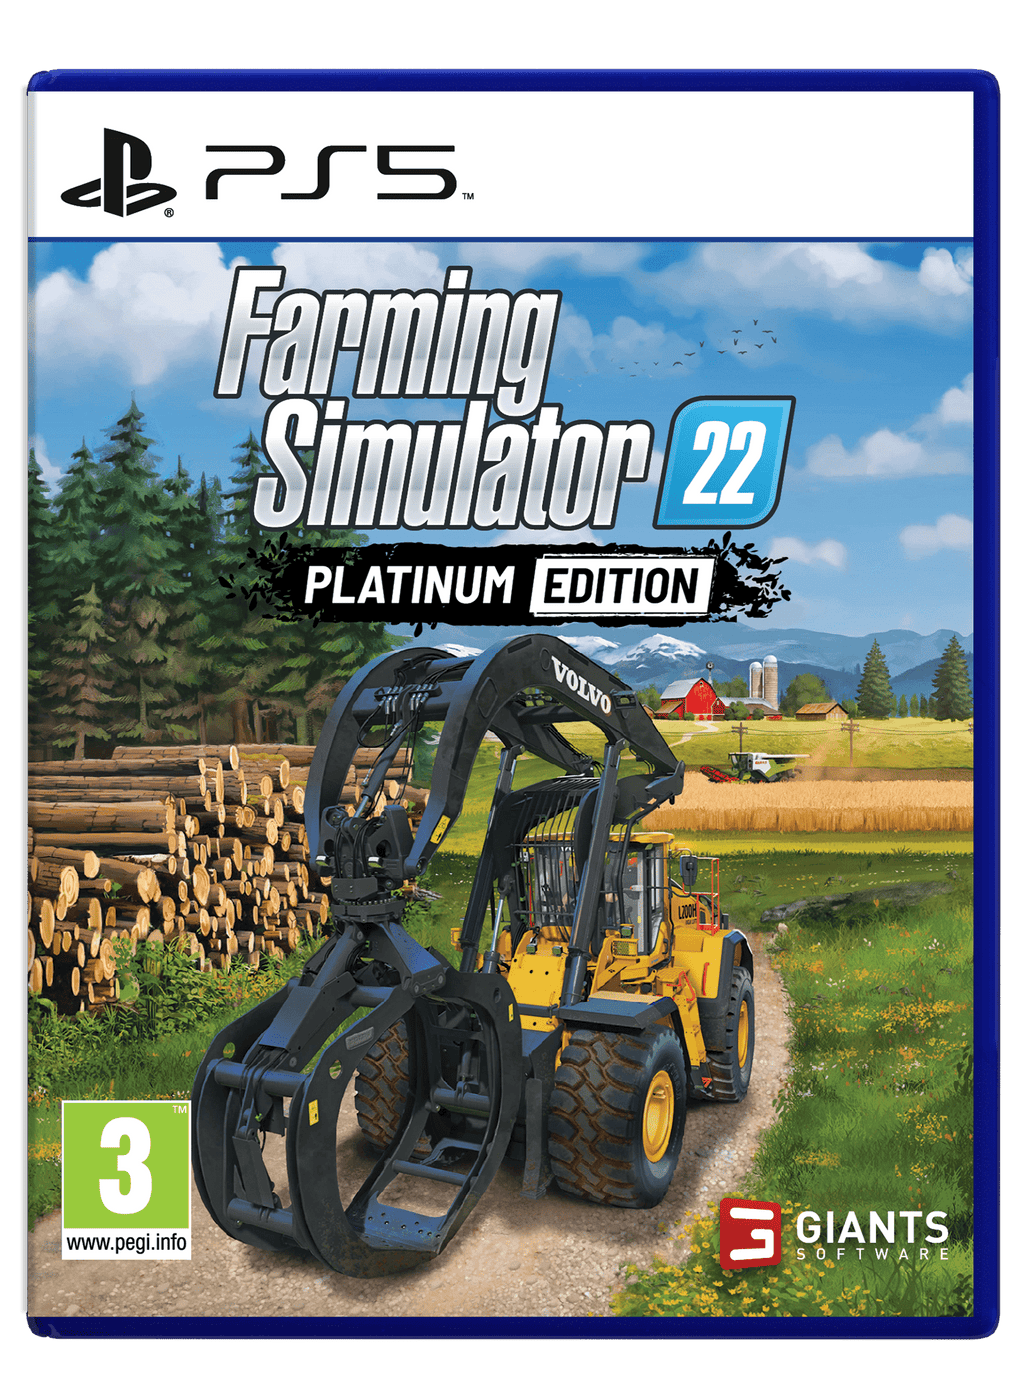 PS4 Farming Simulator 22 software